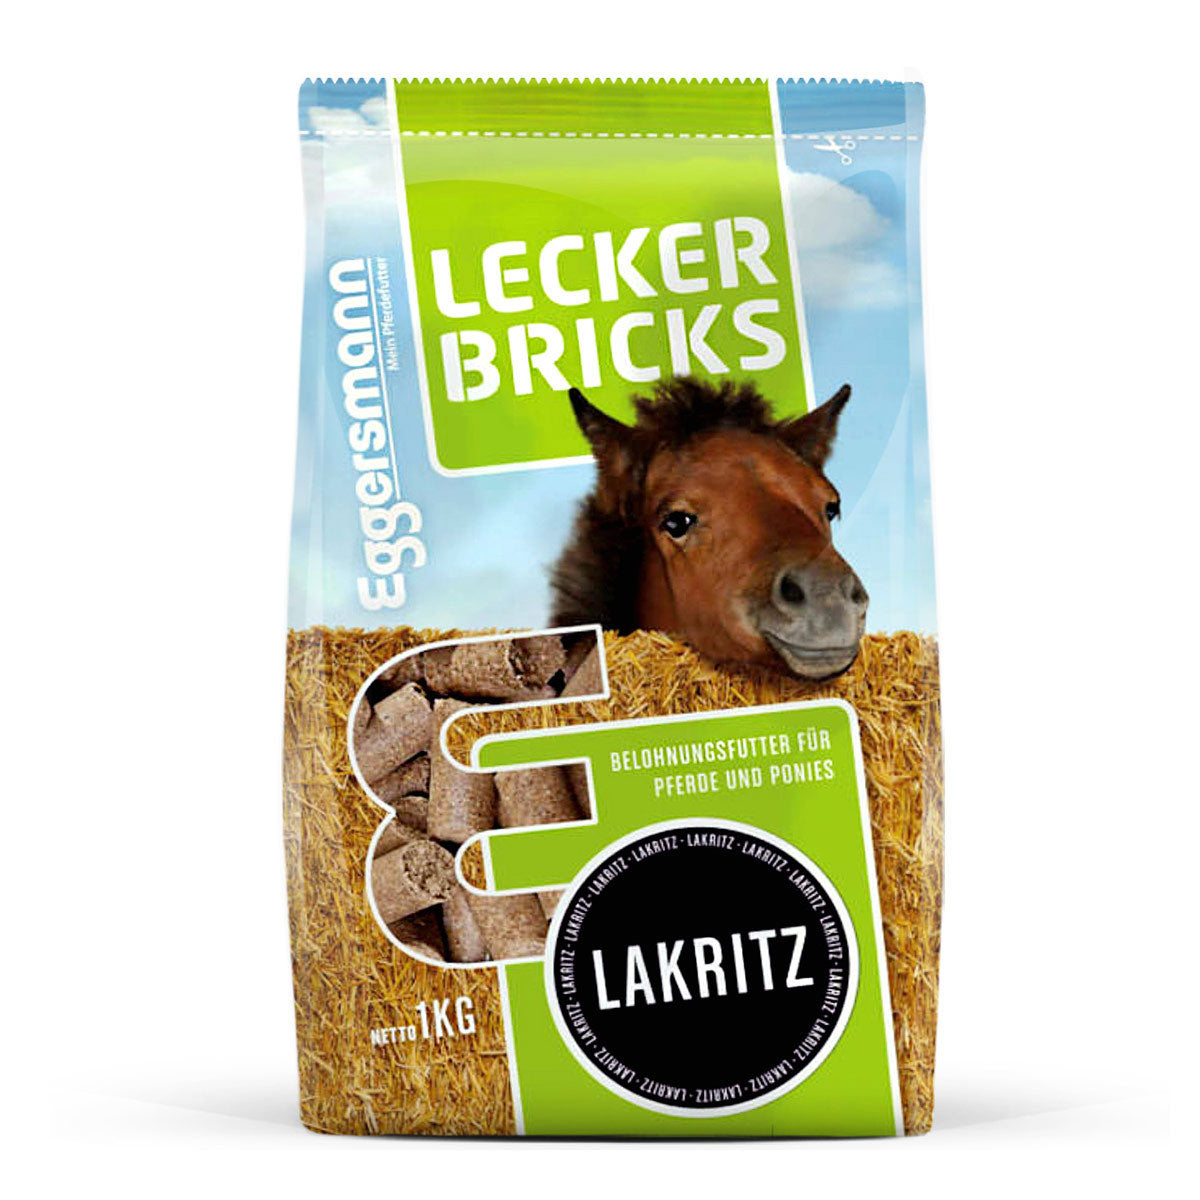 Lecker Bricks 1 kg Lakritz